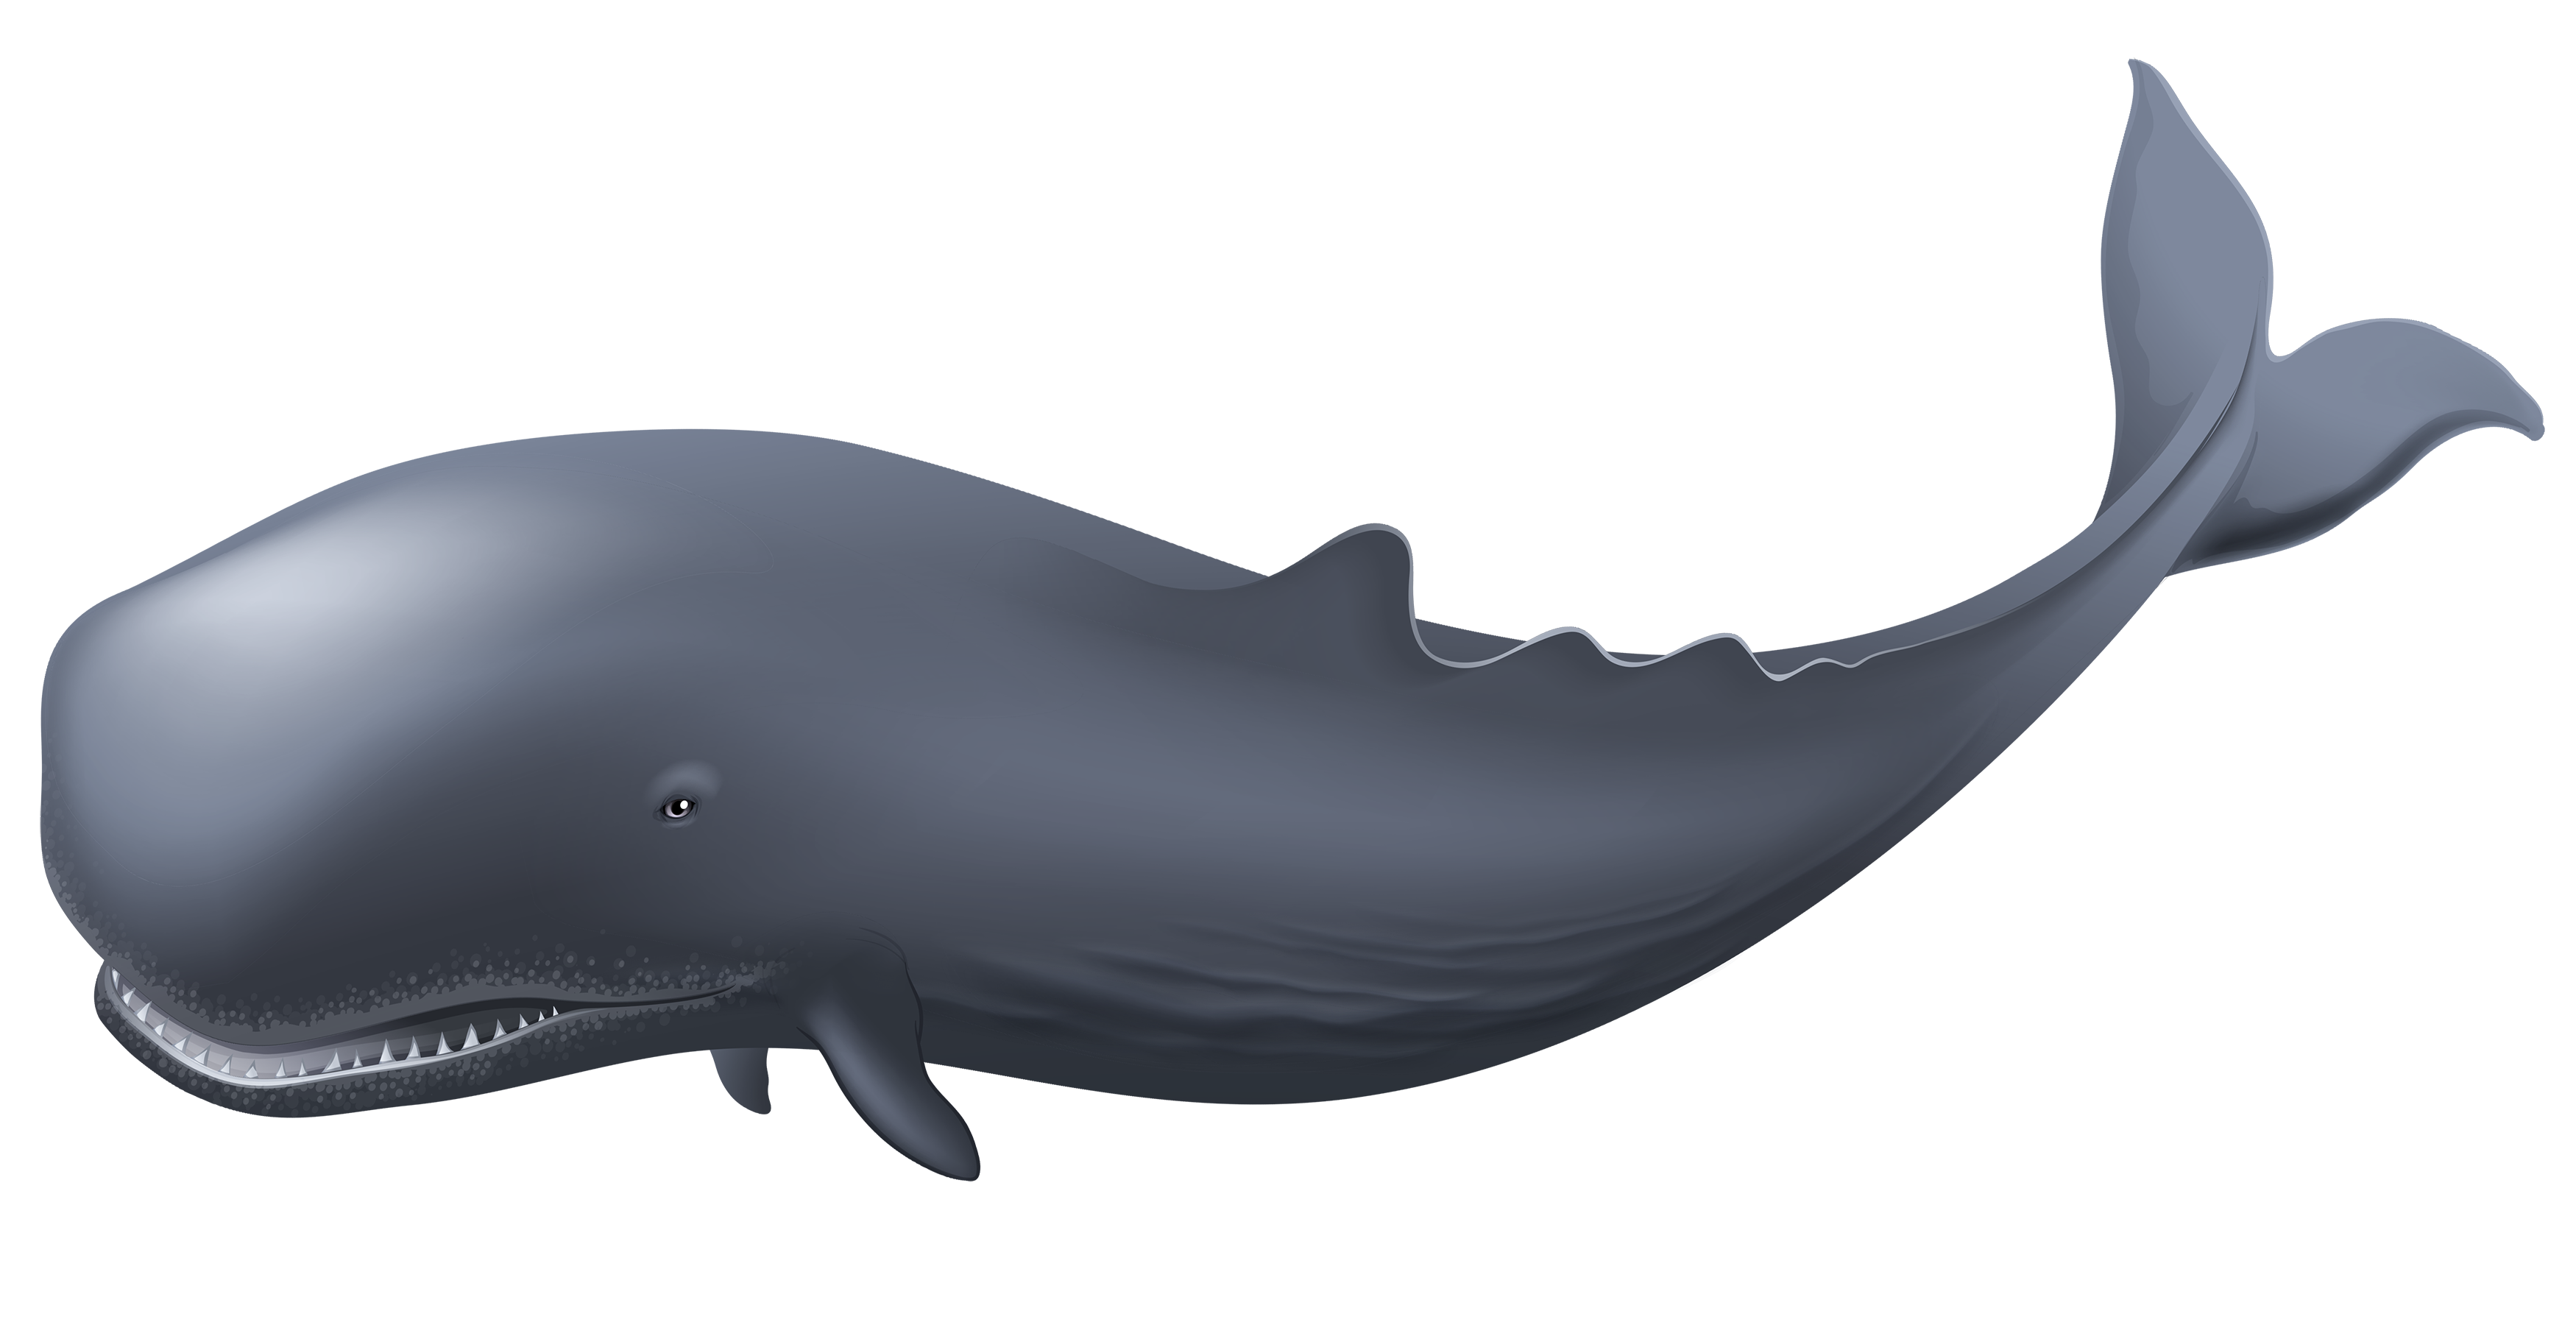 Wieloryb